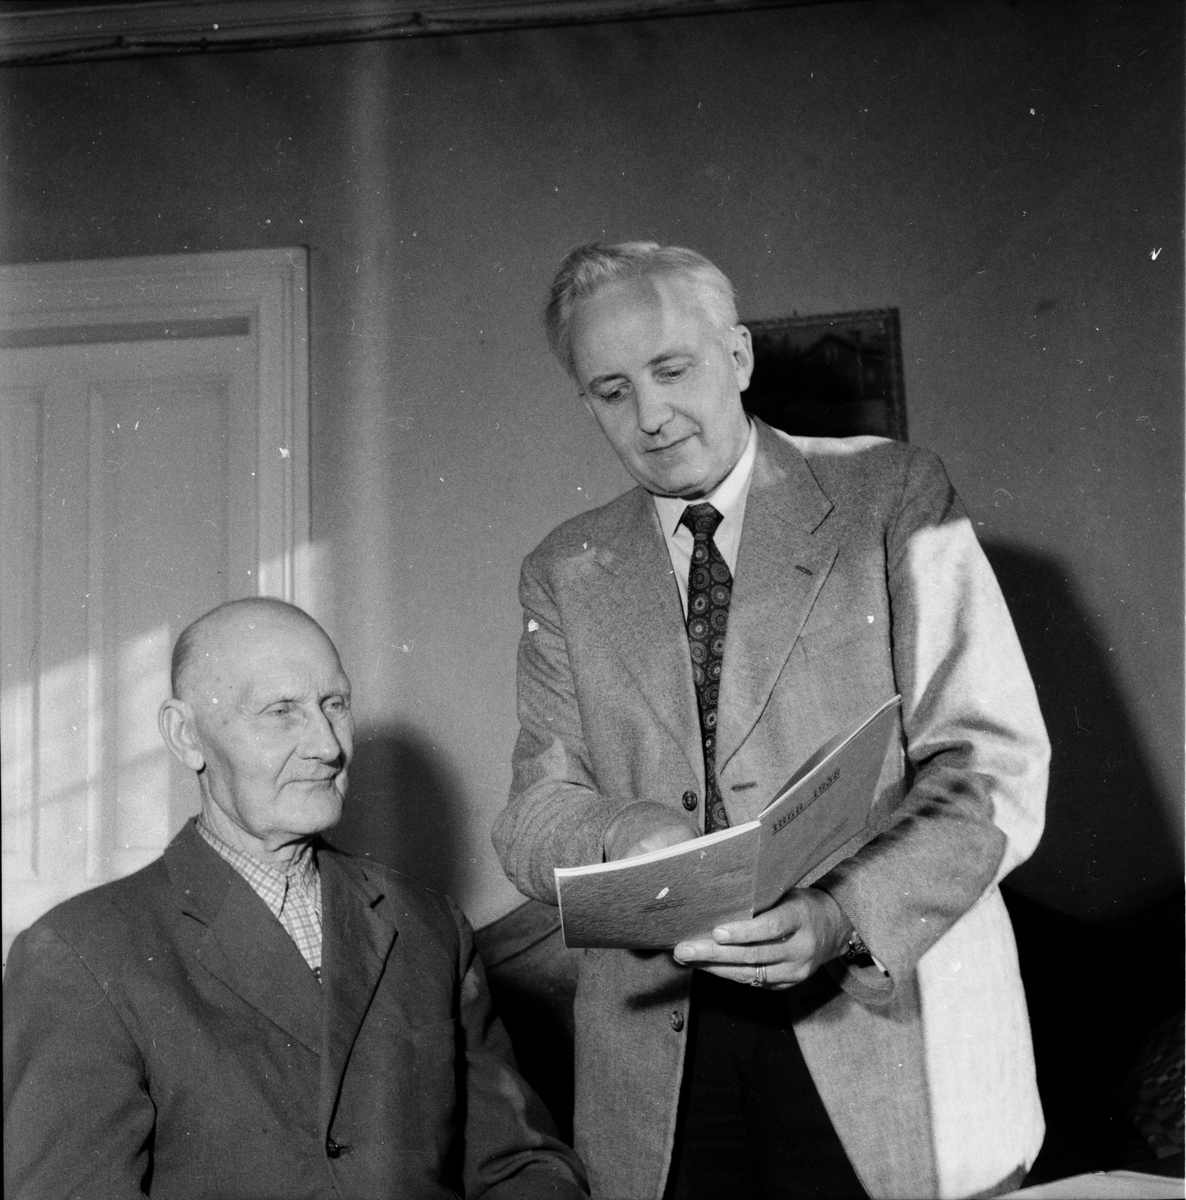 Pastor Nils Andersson.
Järvsö 17/9 1958